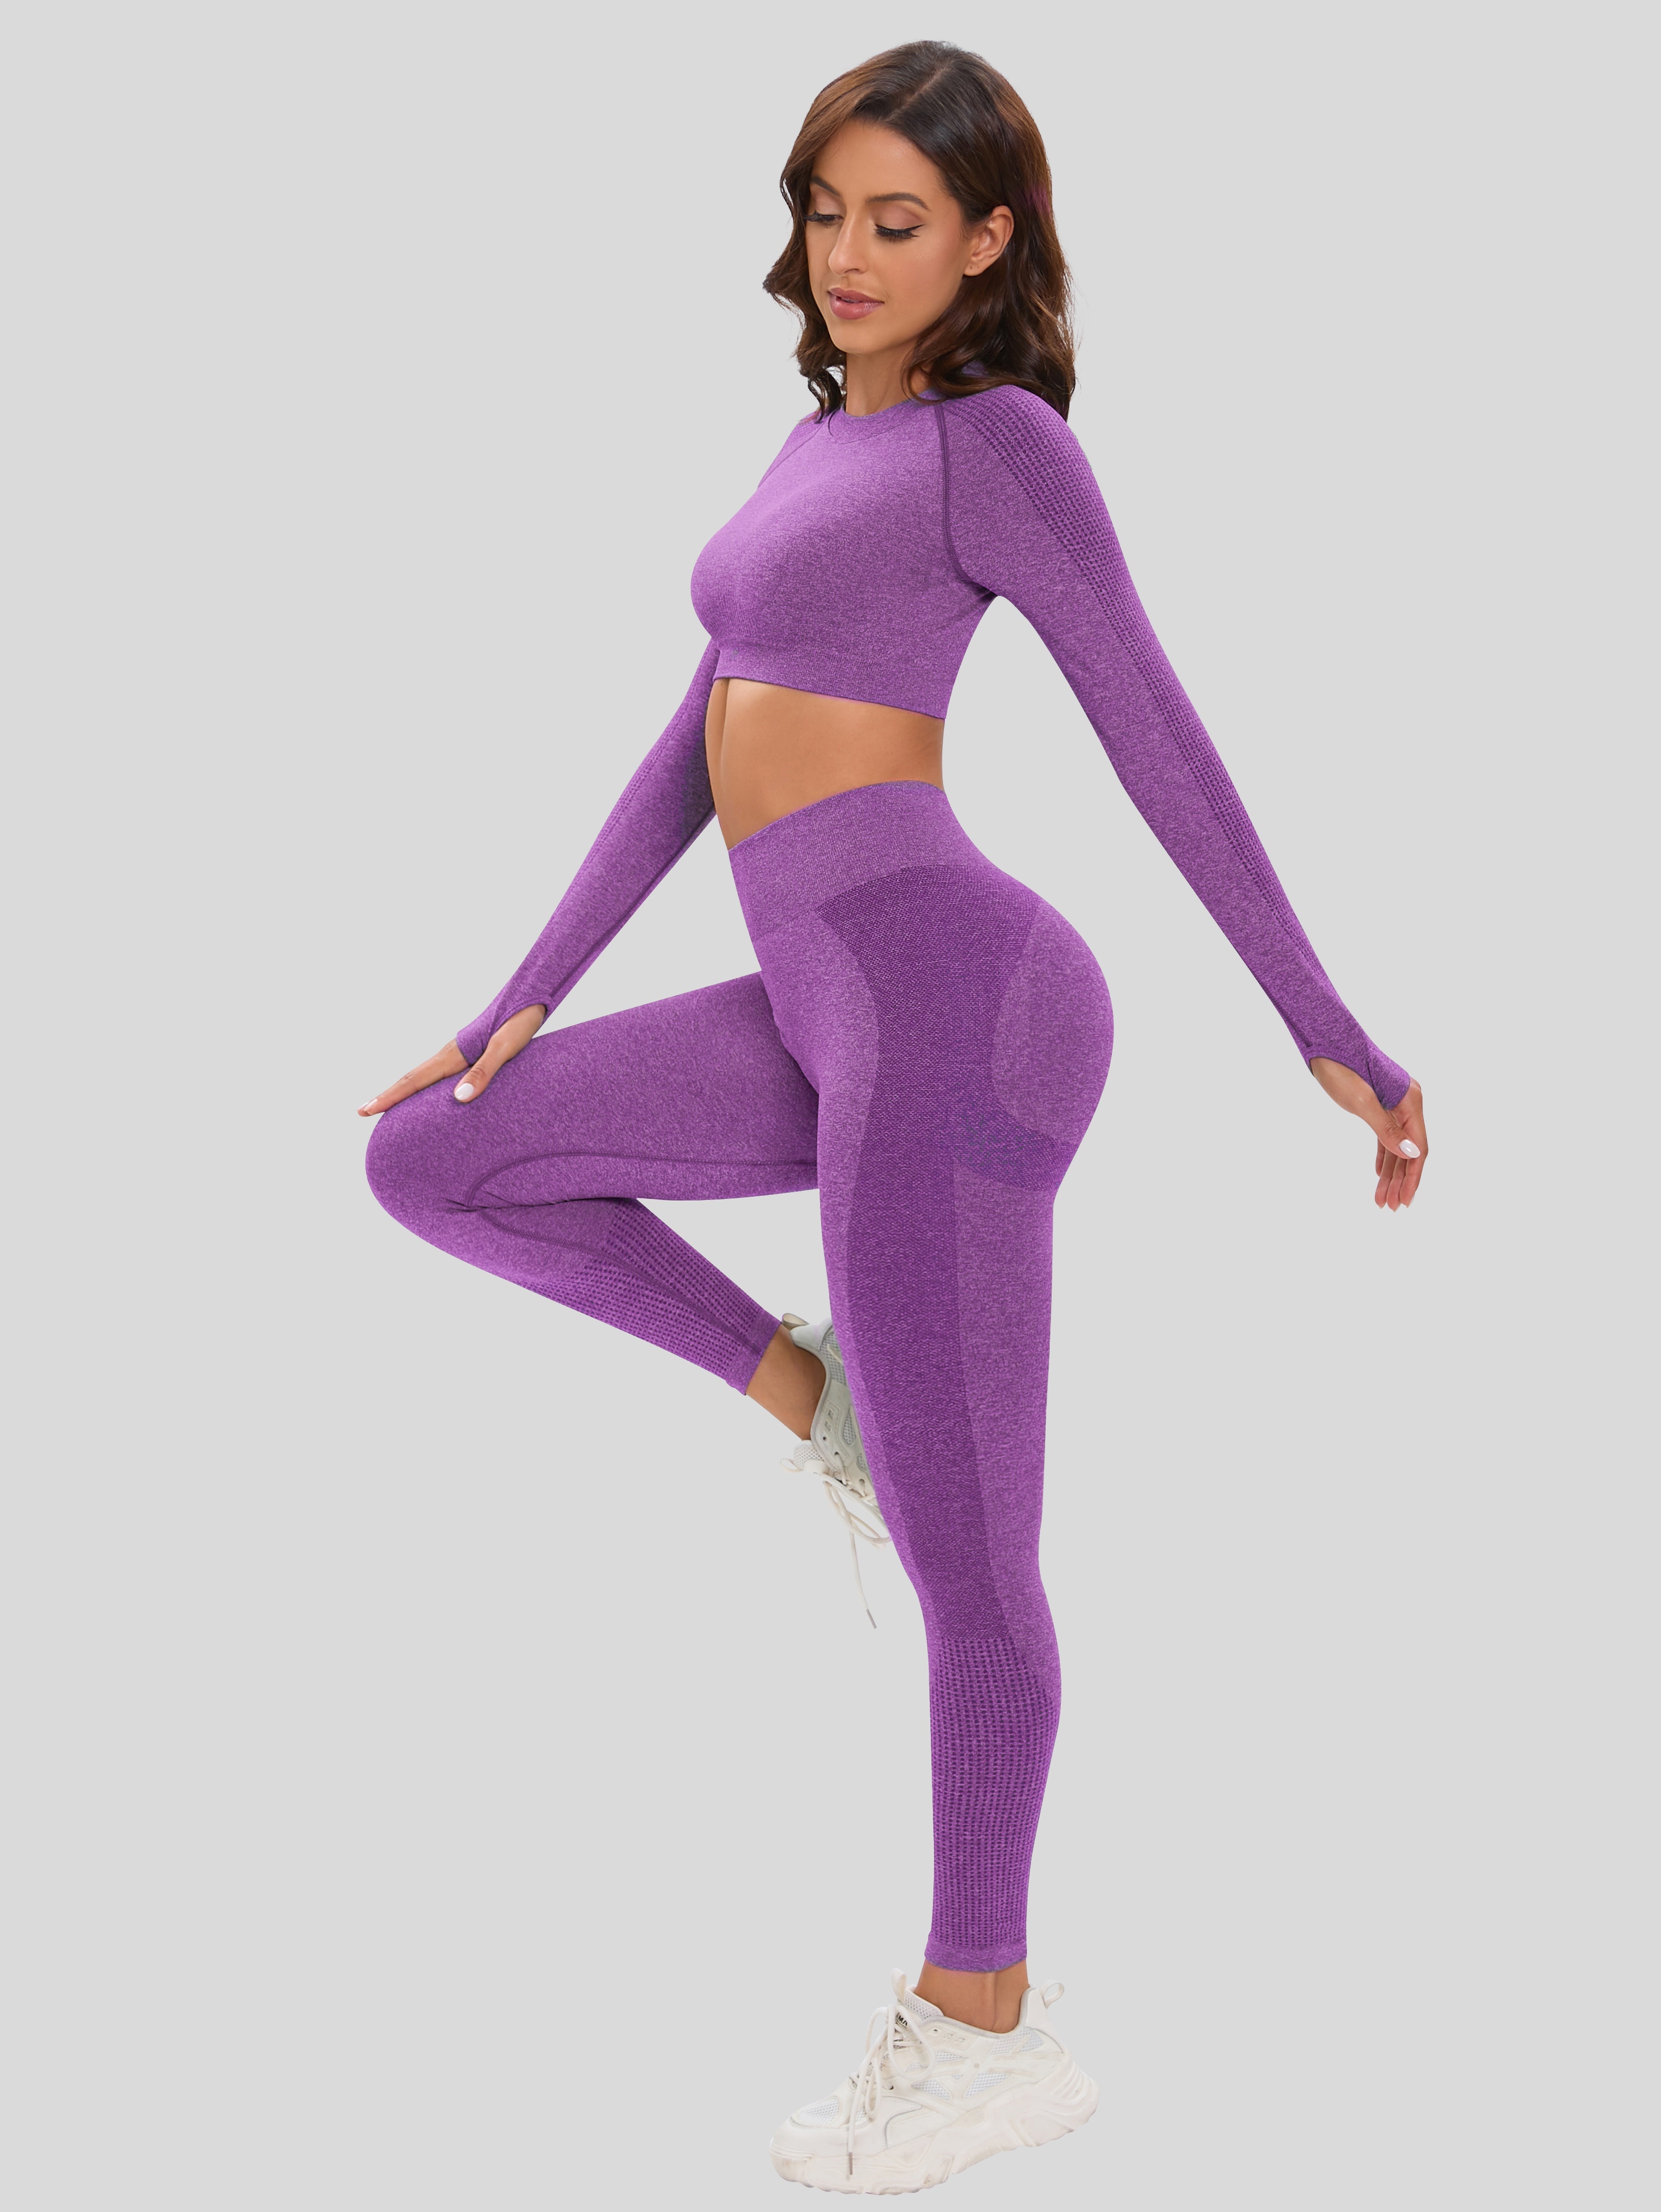 Seamless Women Yoga Sets,Long Sleeve Top and High Waist Leggings